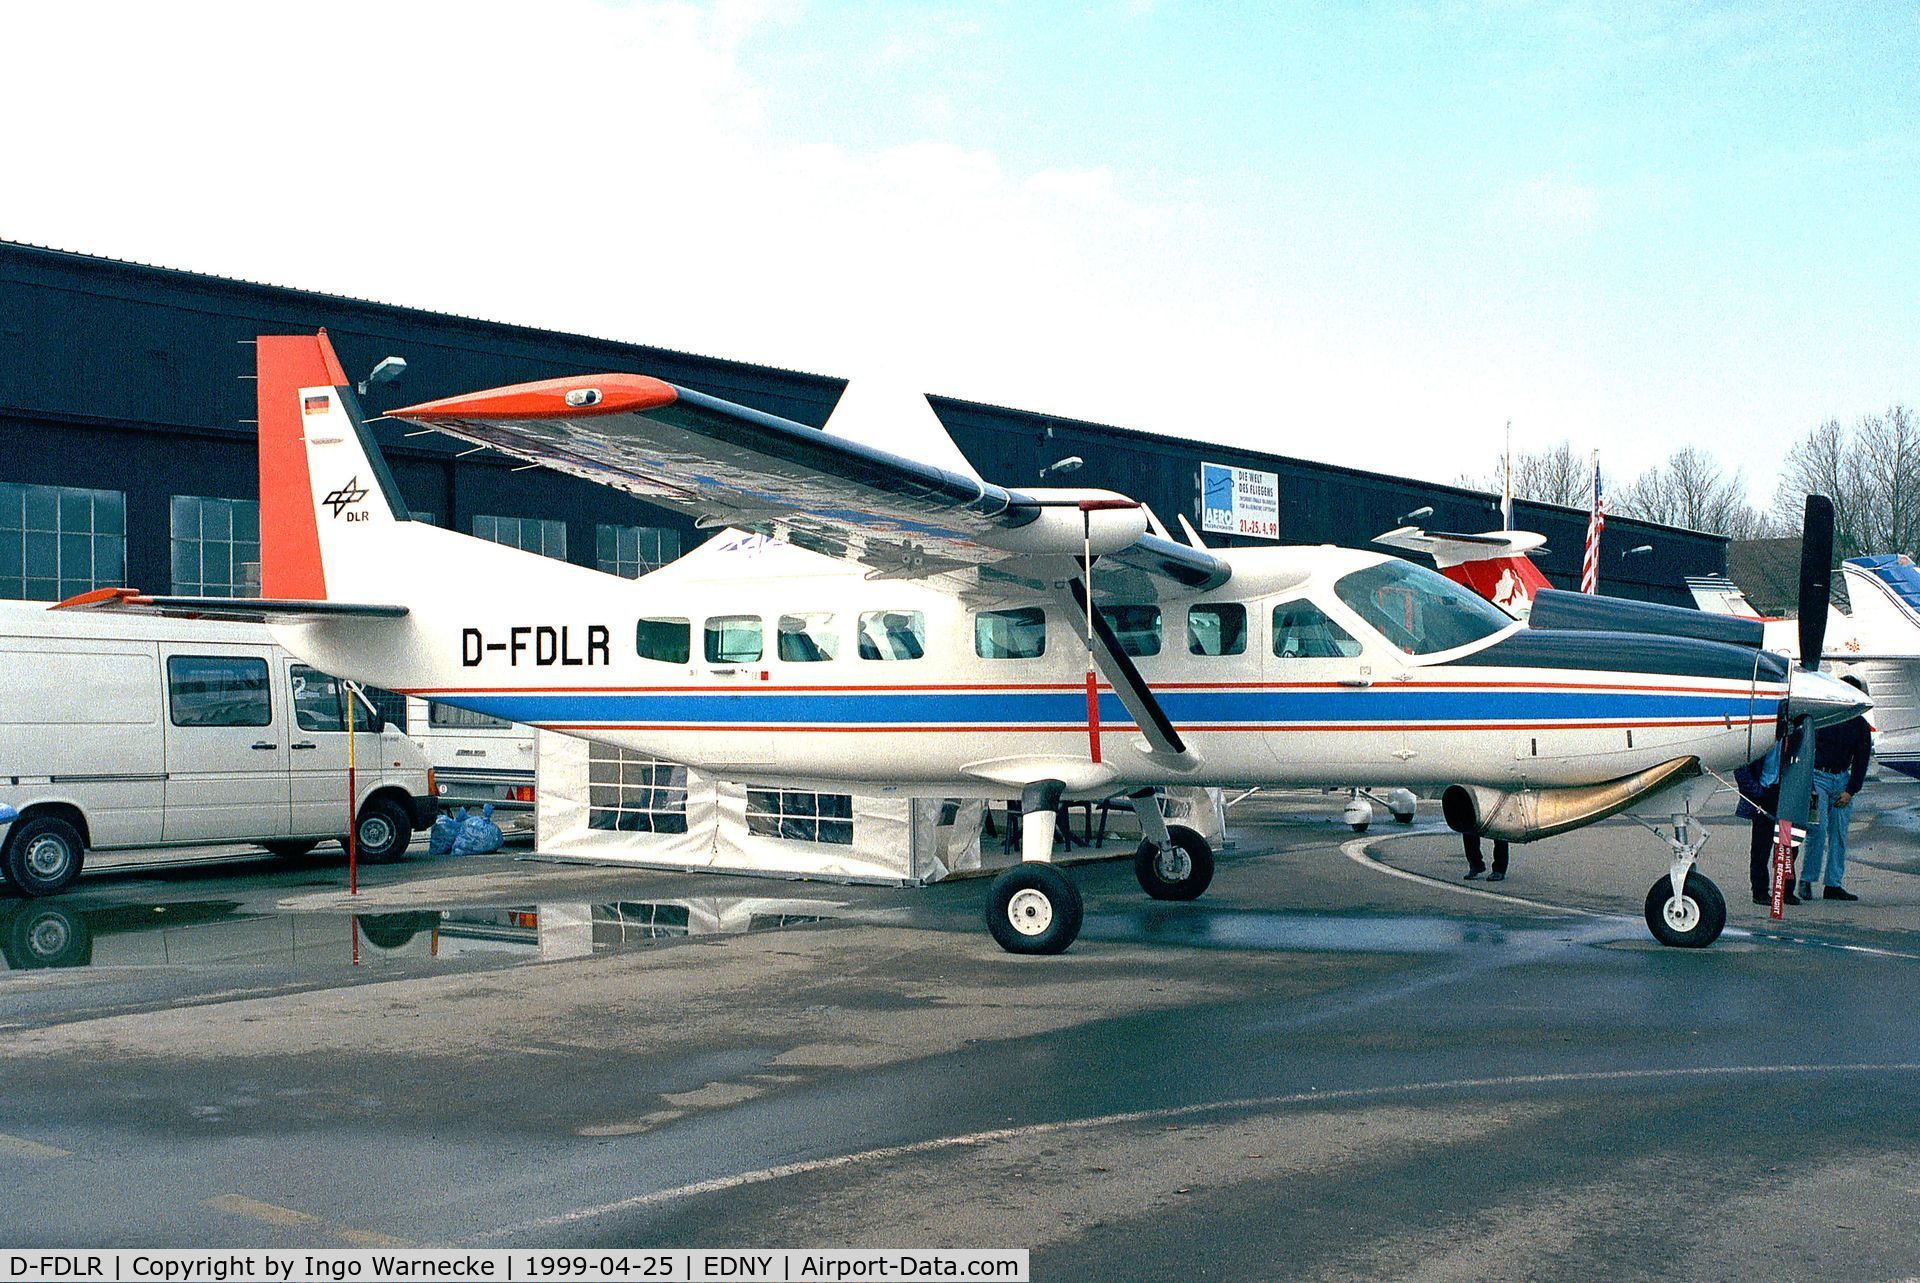 D-FDLR, 1998 Cessna 208B Grand Caravan C/N 208B-0708, Cessna 208B Grand Caravan of the DLR at the Aero 1999, Friedrichshafen